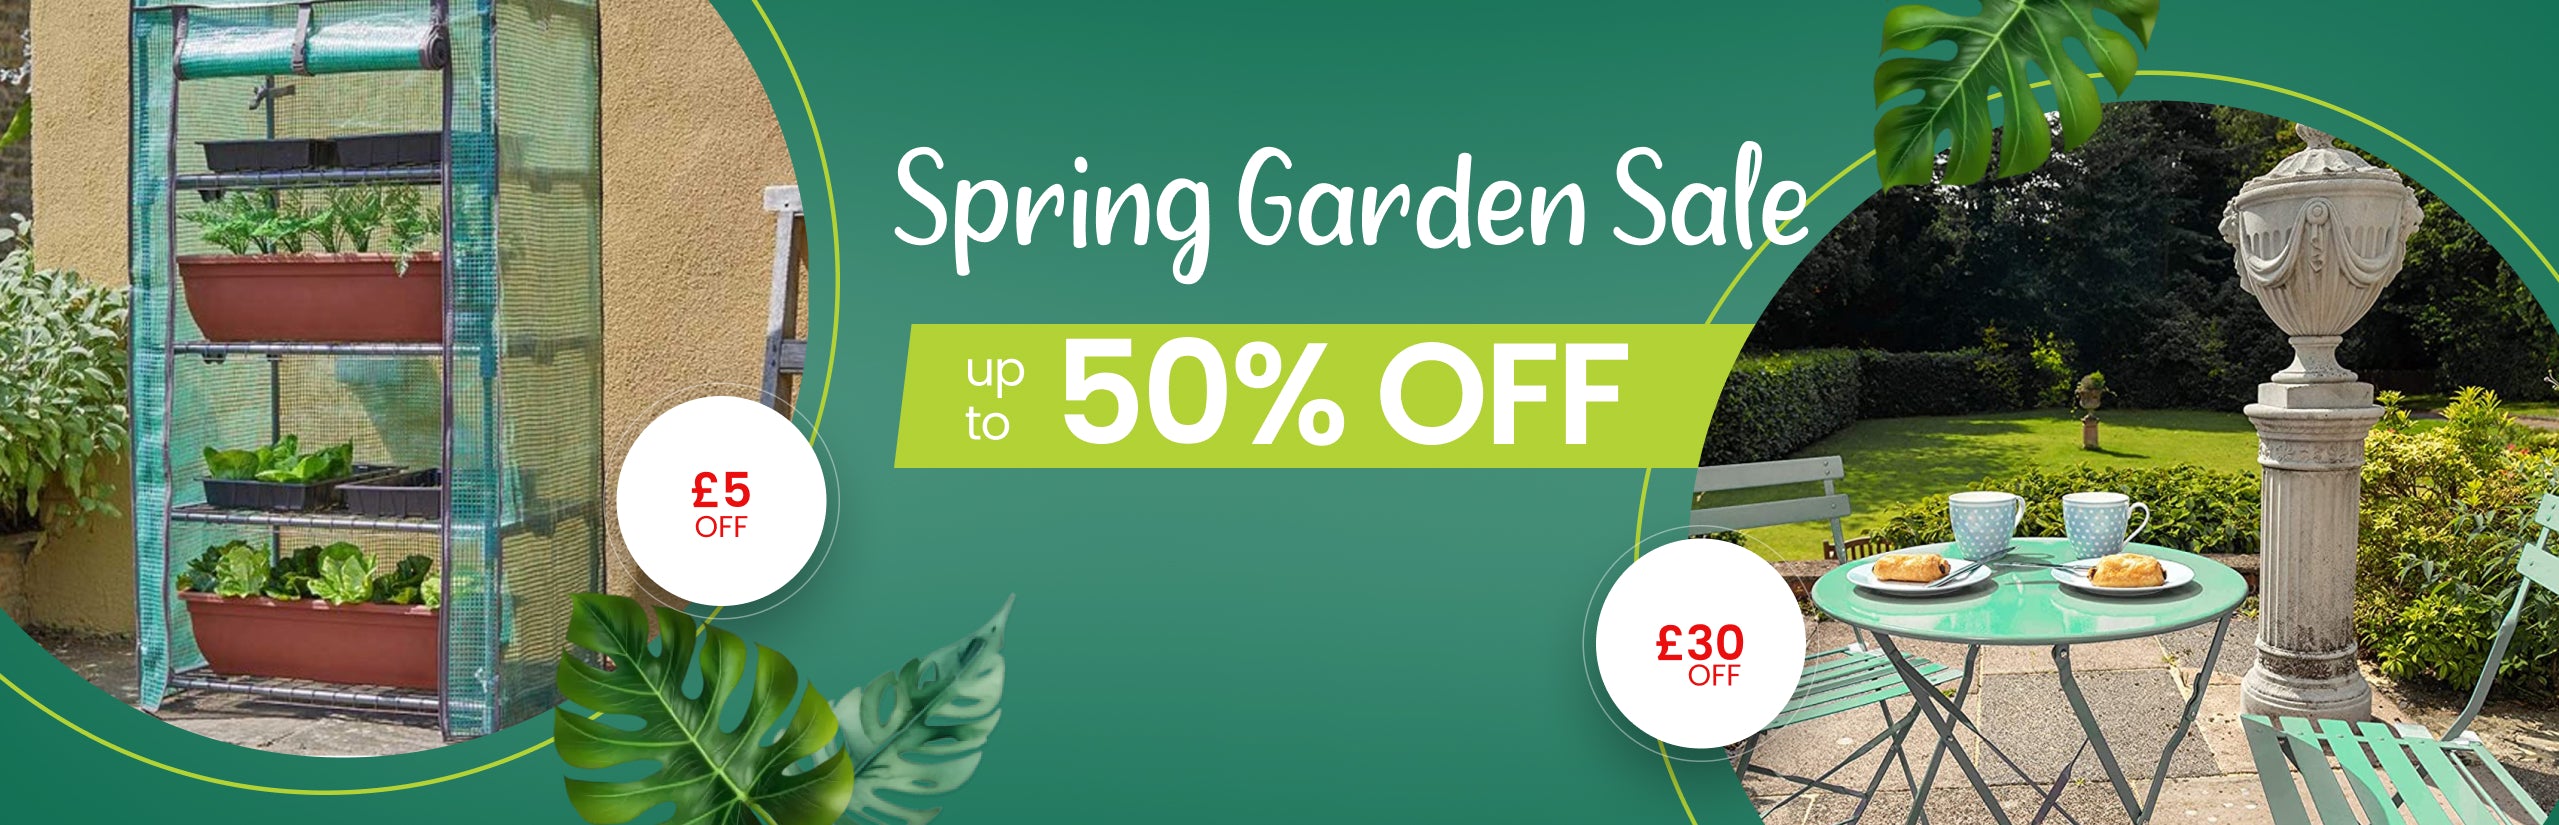 yorkshire trading spring garden sale